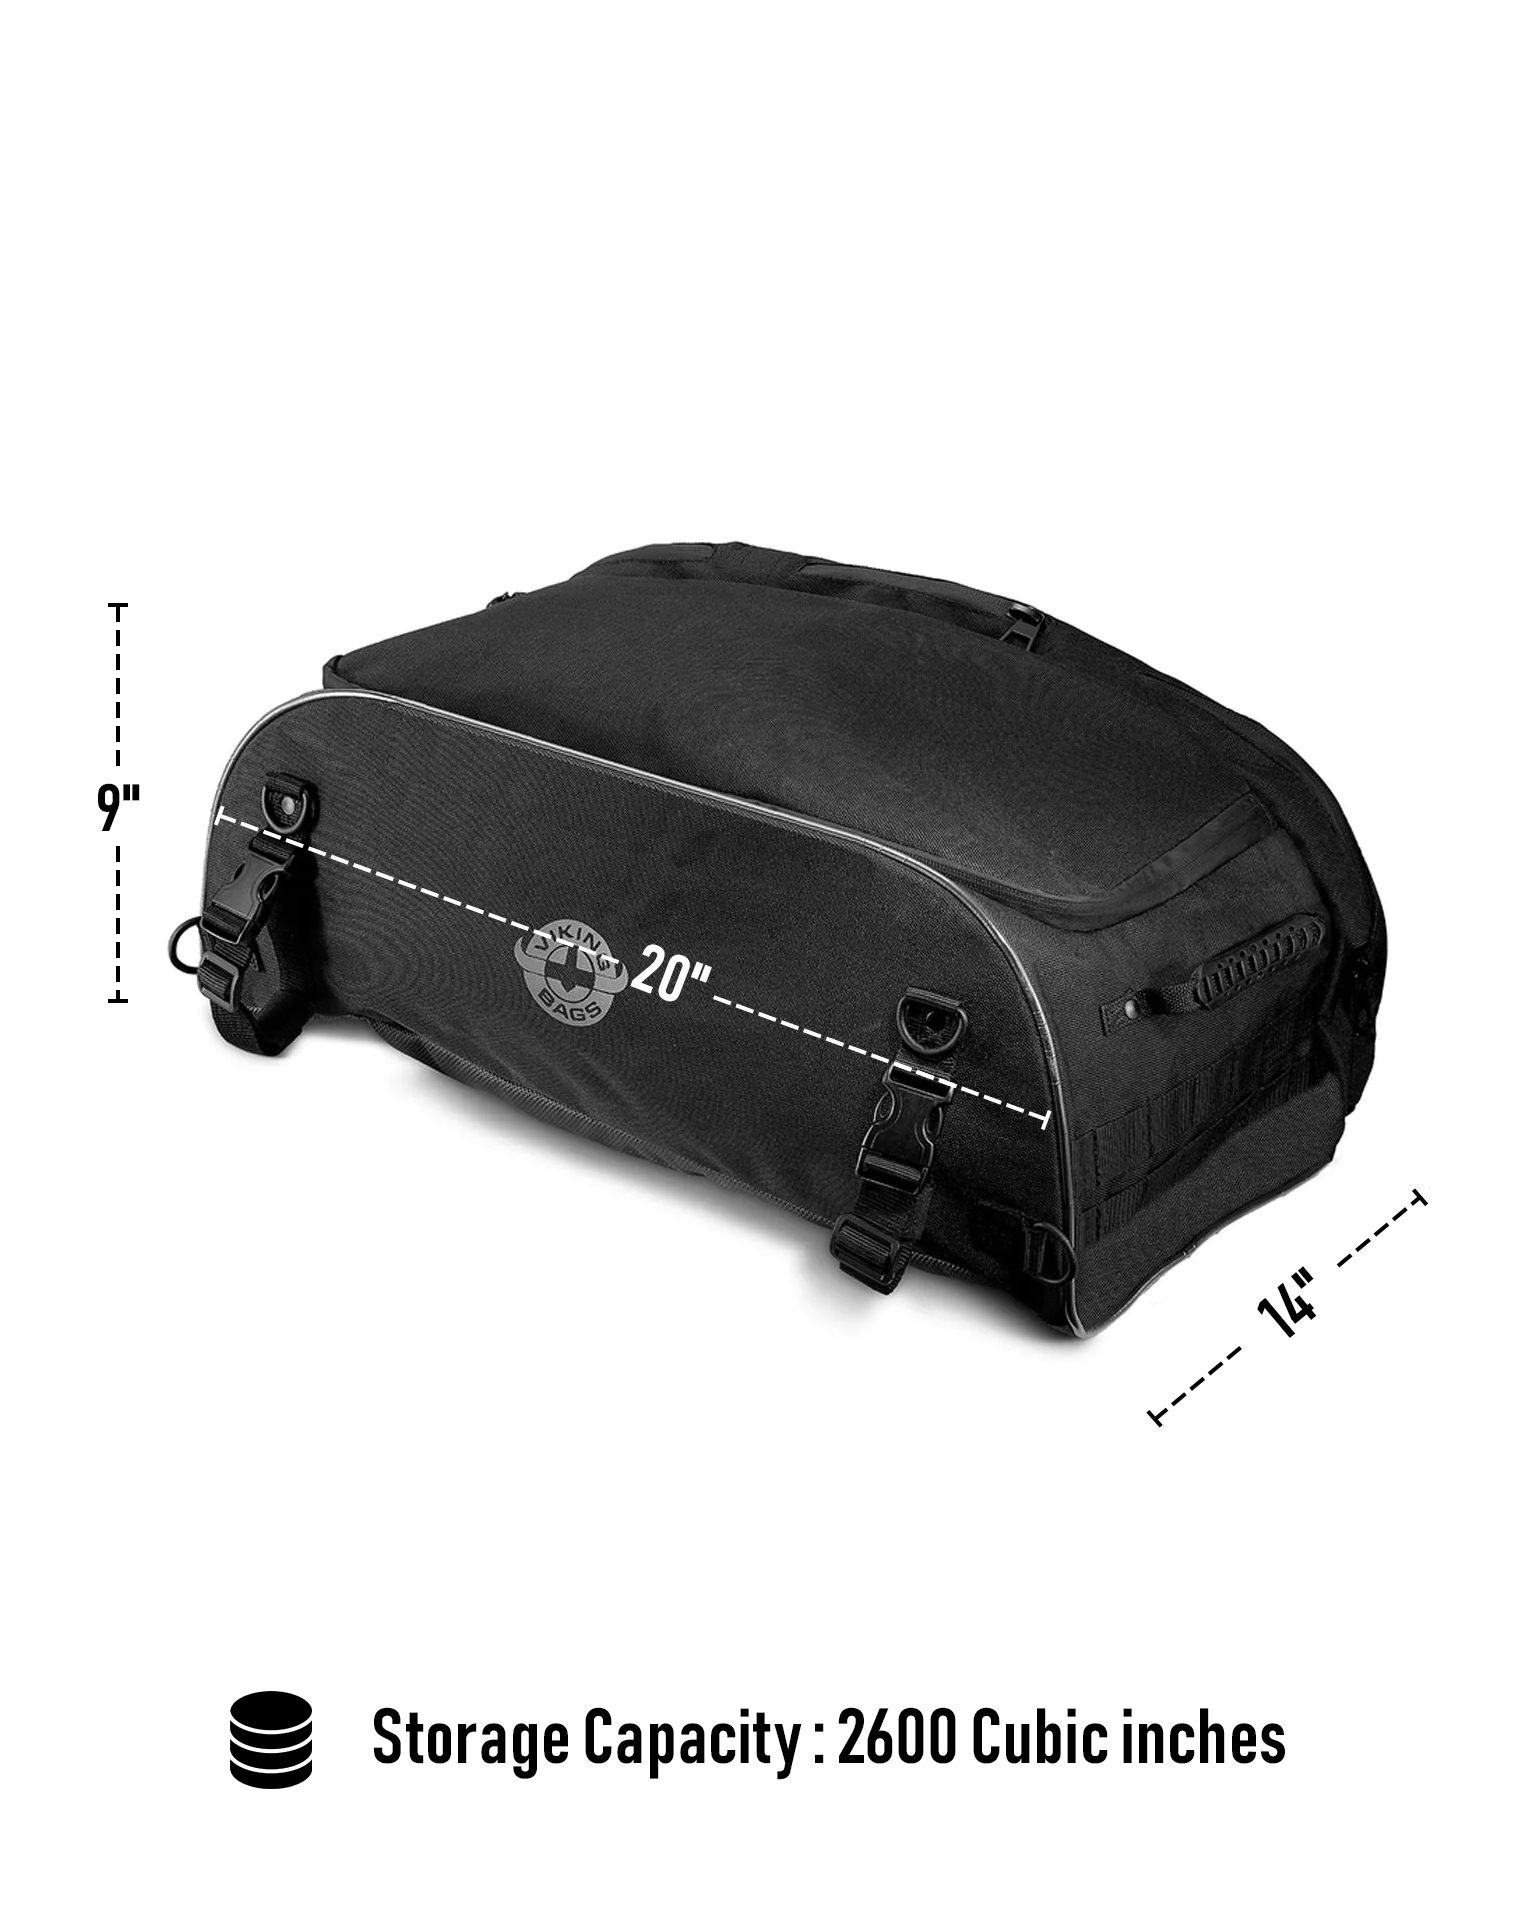 42L - Voyage Collapsible XL Motorcycle Luggage Rack Bag